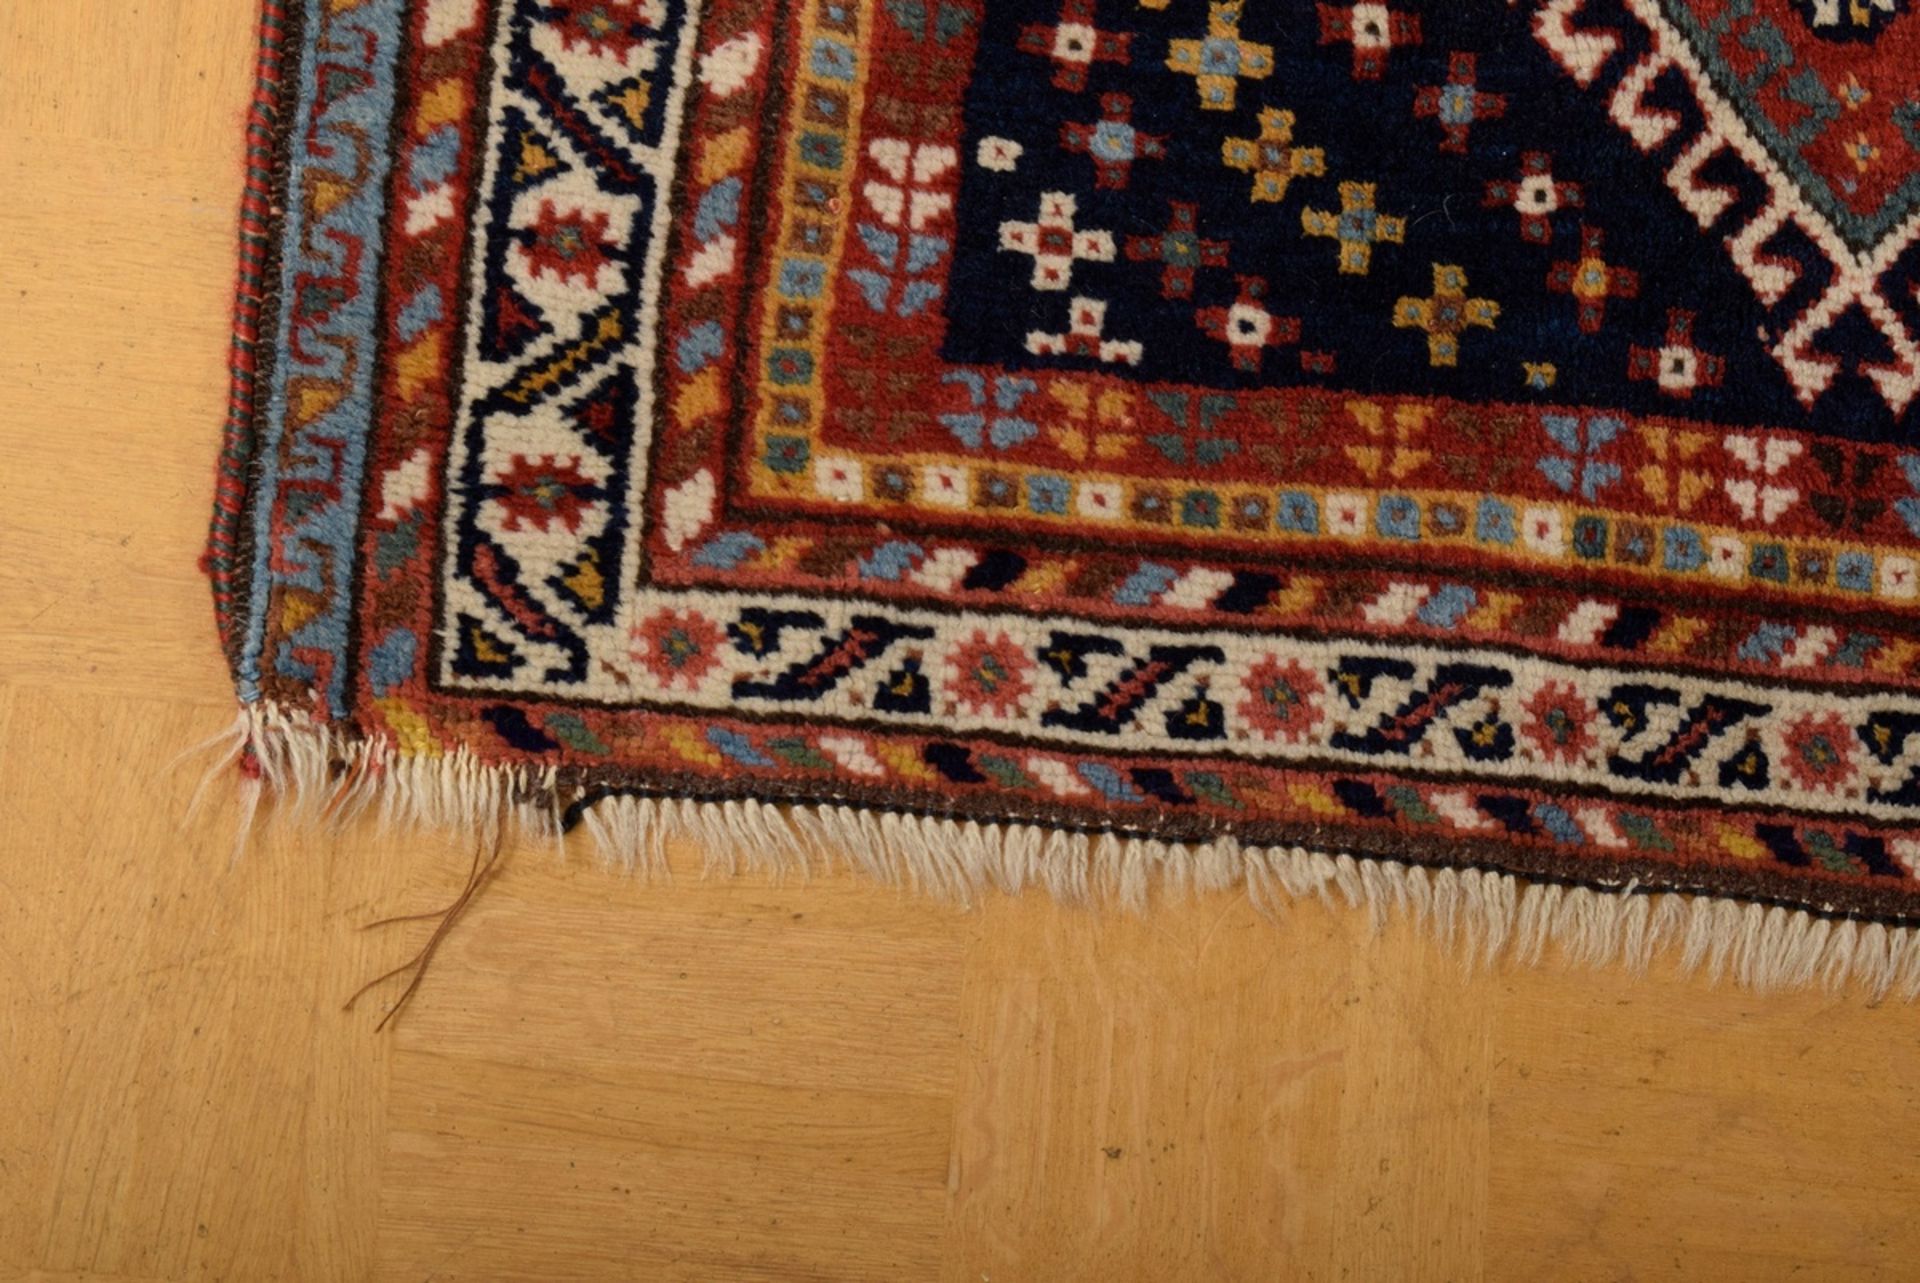 Luri Teppich mit Rapport roter und nachtblauer R | A Luri carpet with a rapport of red and midnight - Bild 3 aus 8